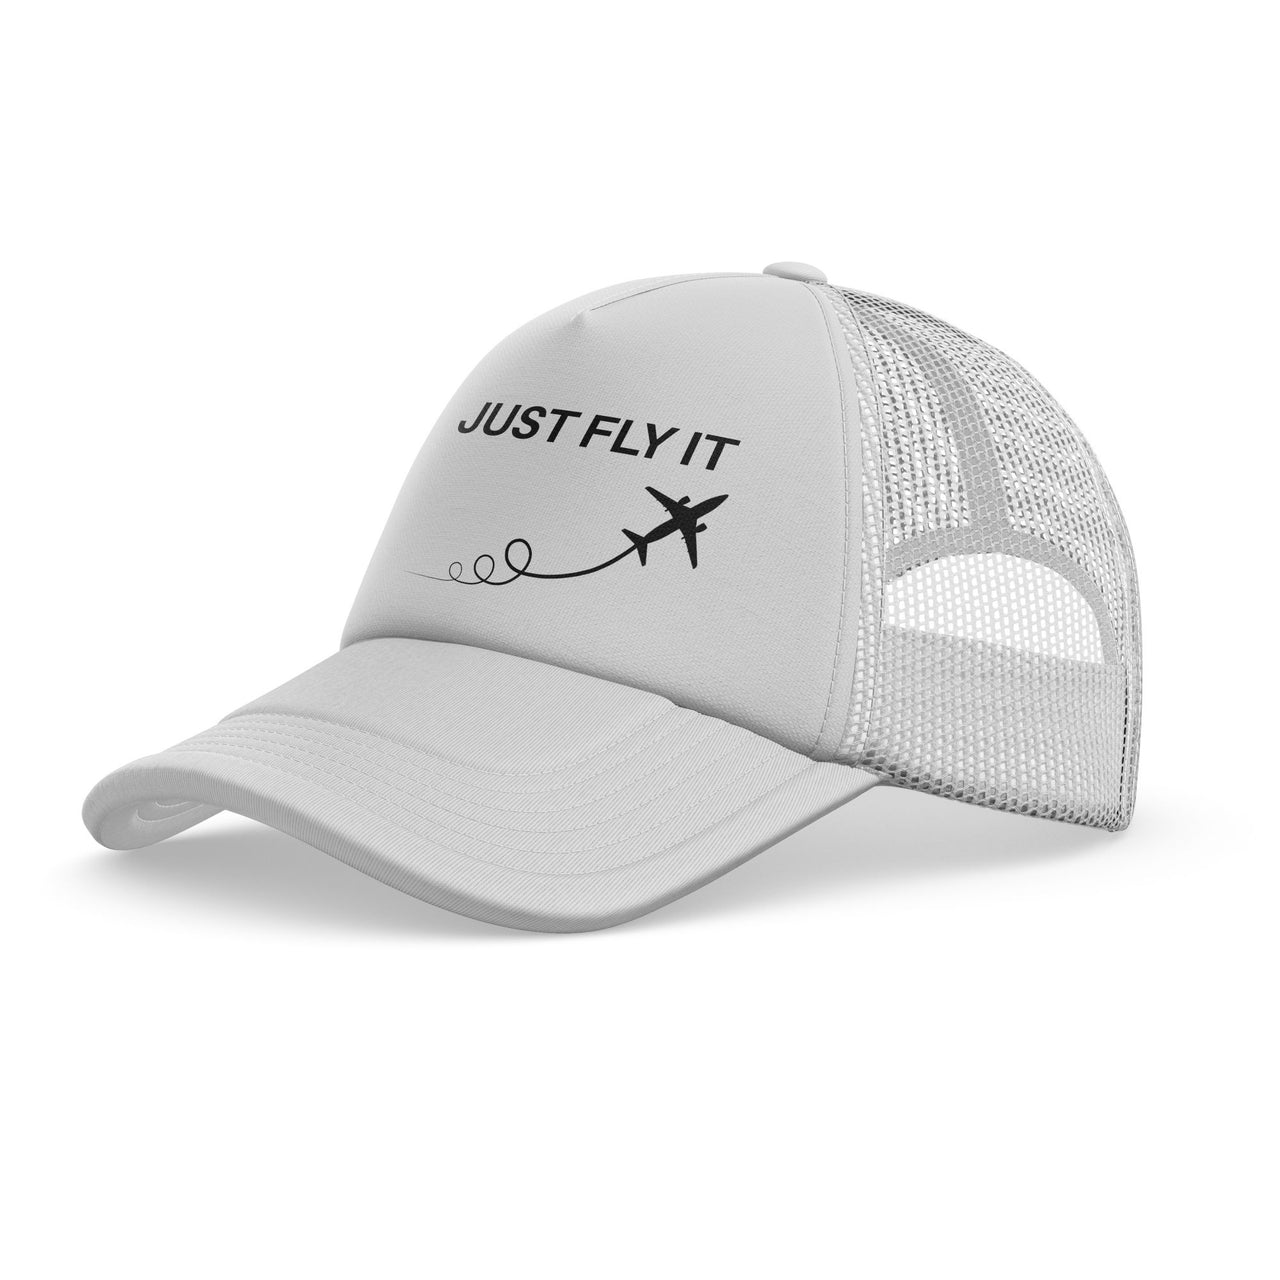 Just Fly It Designed Trucker Caps & Hats